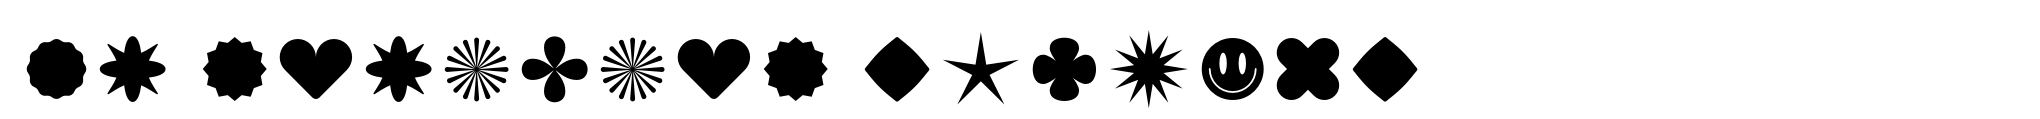 FT Activica Symbols image